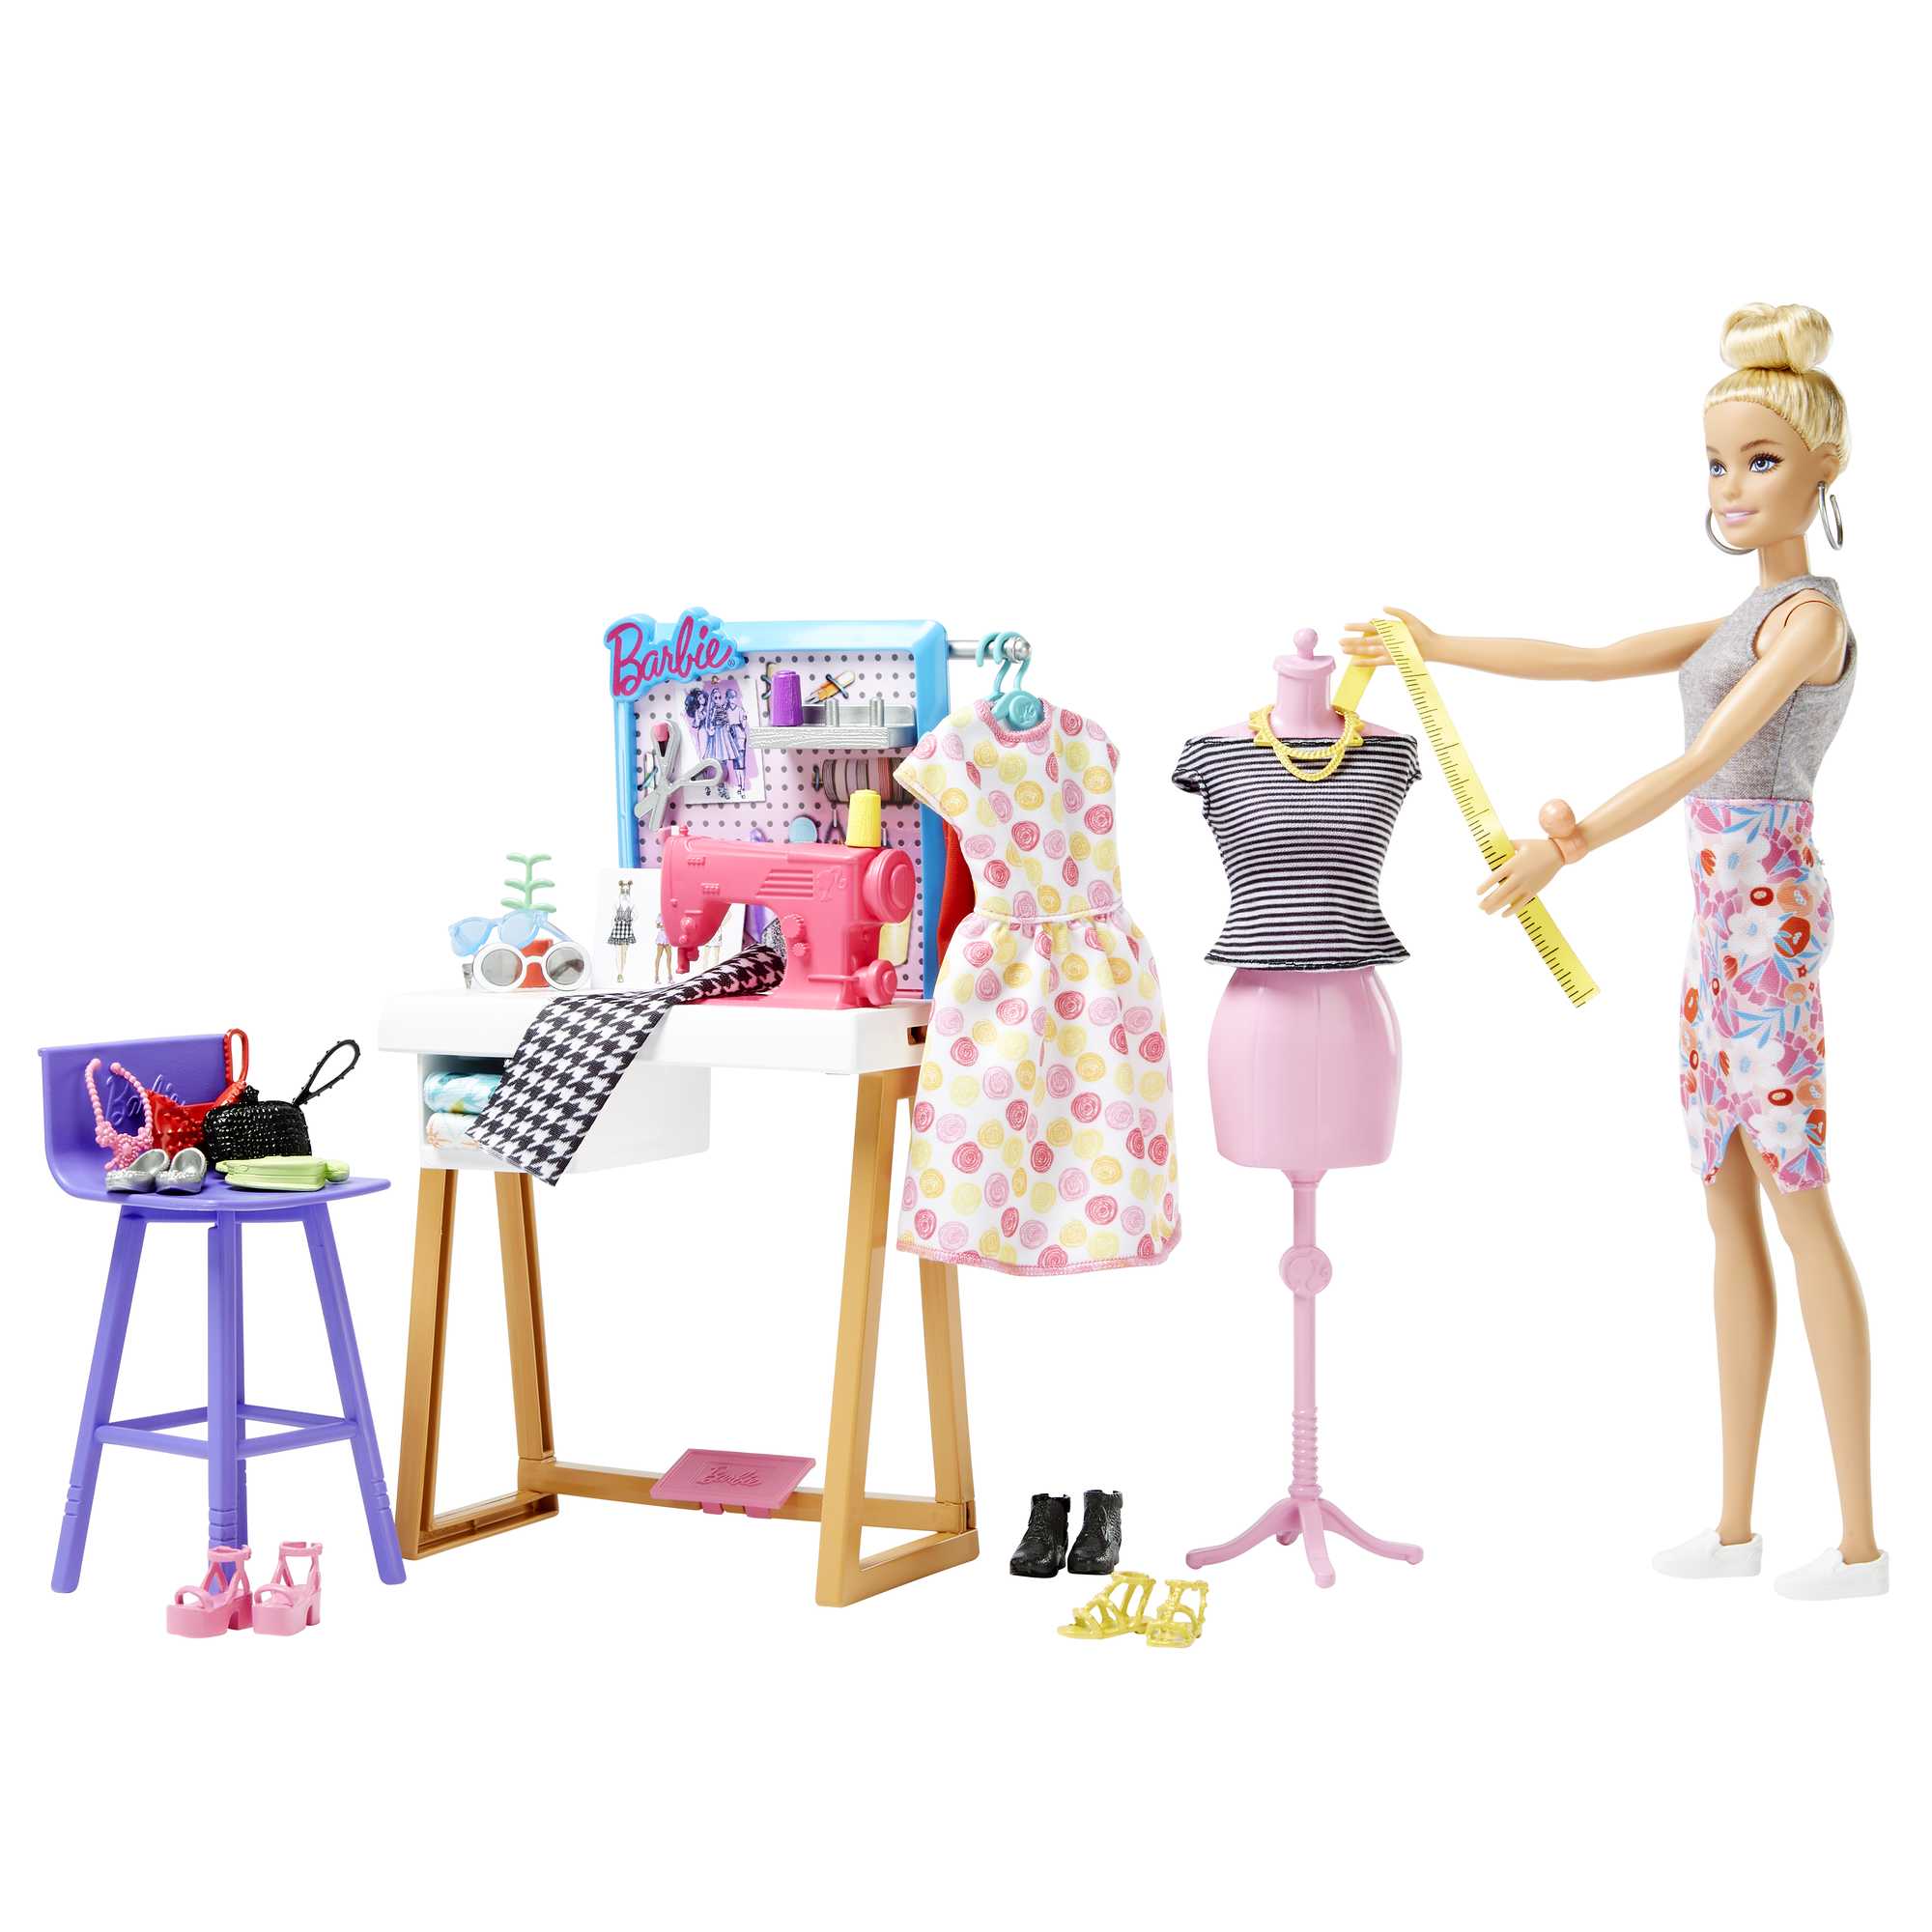 Barbie as Fashion Designer